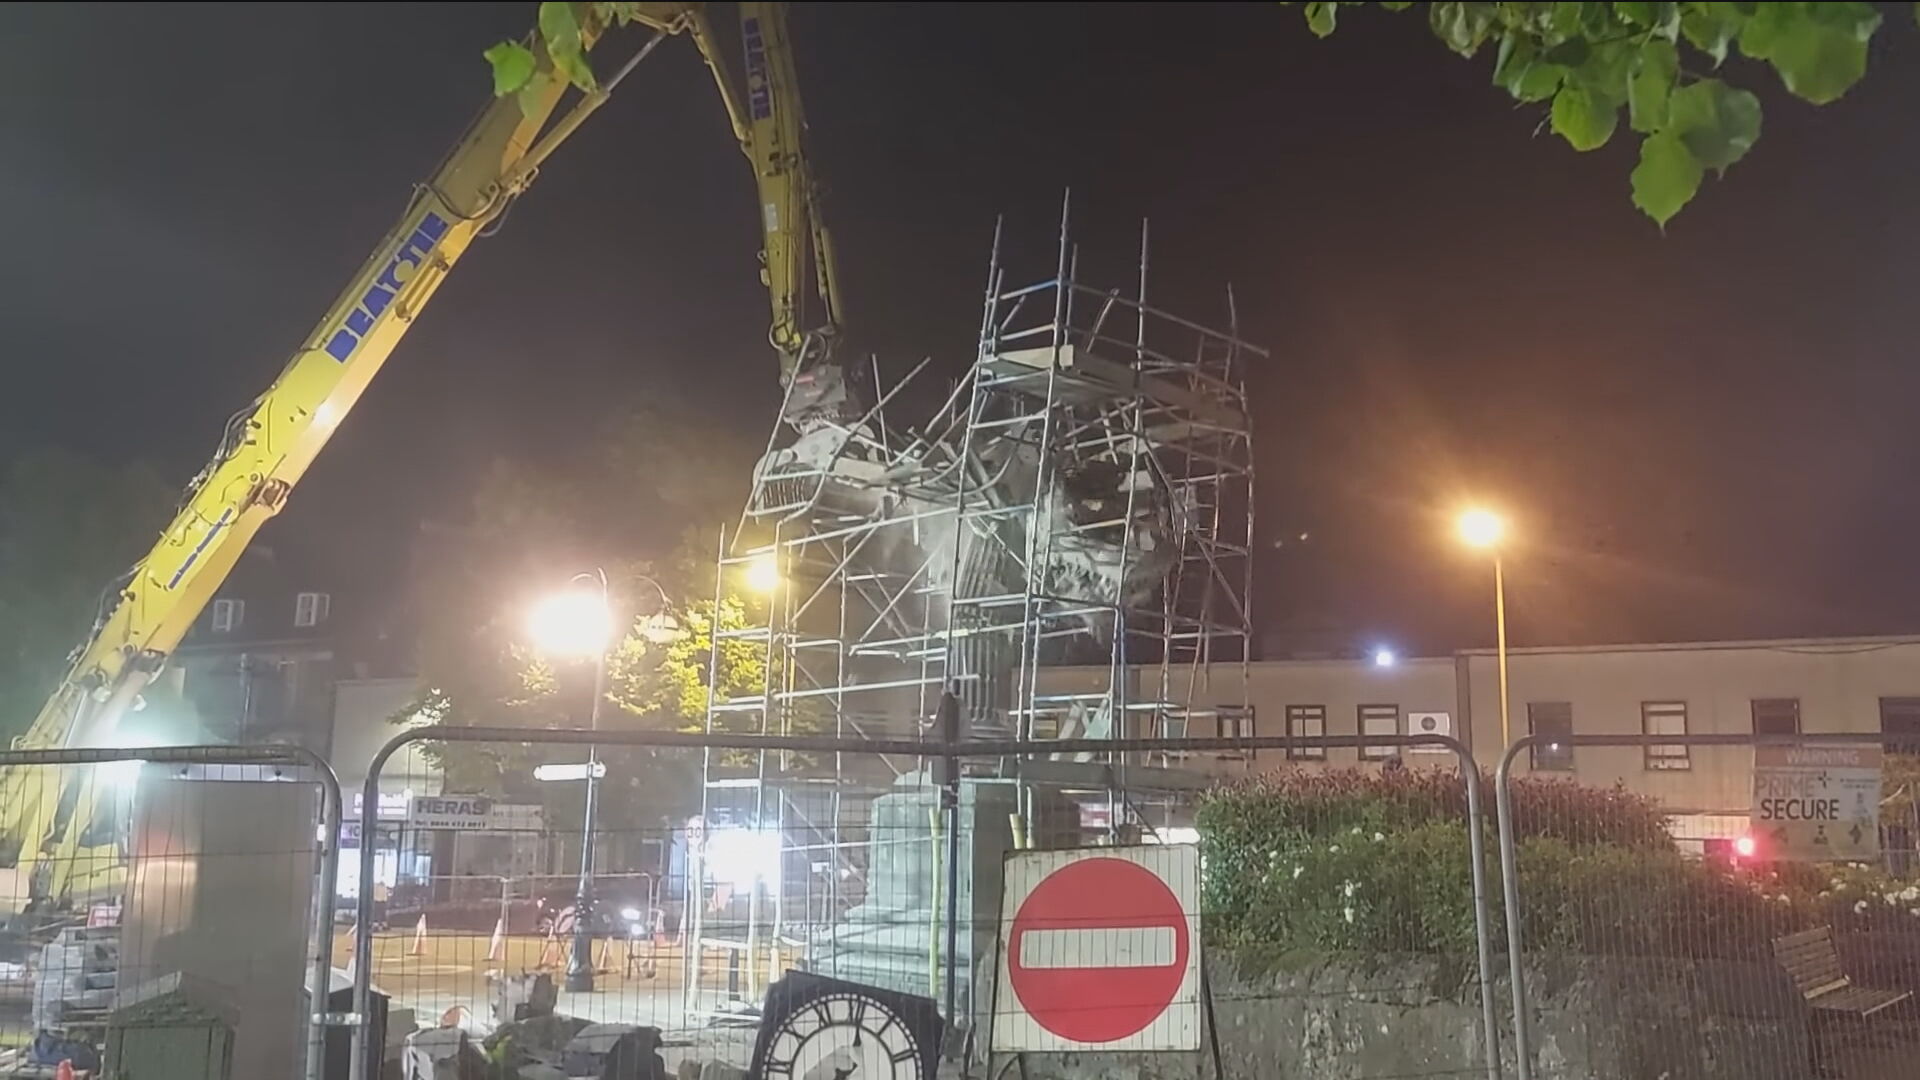 Shock at demolishing of historical Stirling clock tower